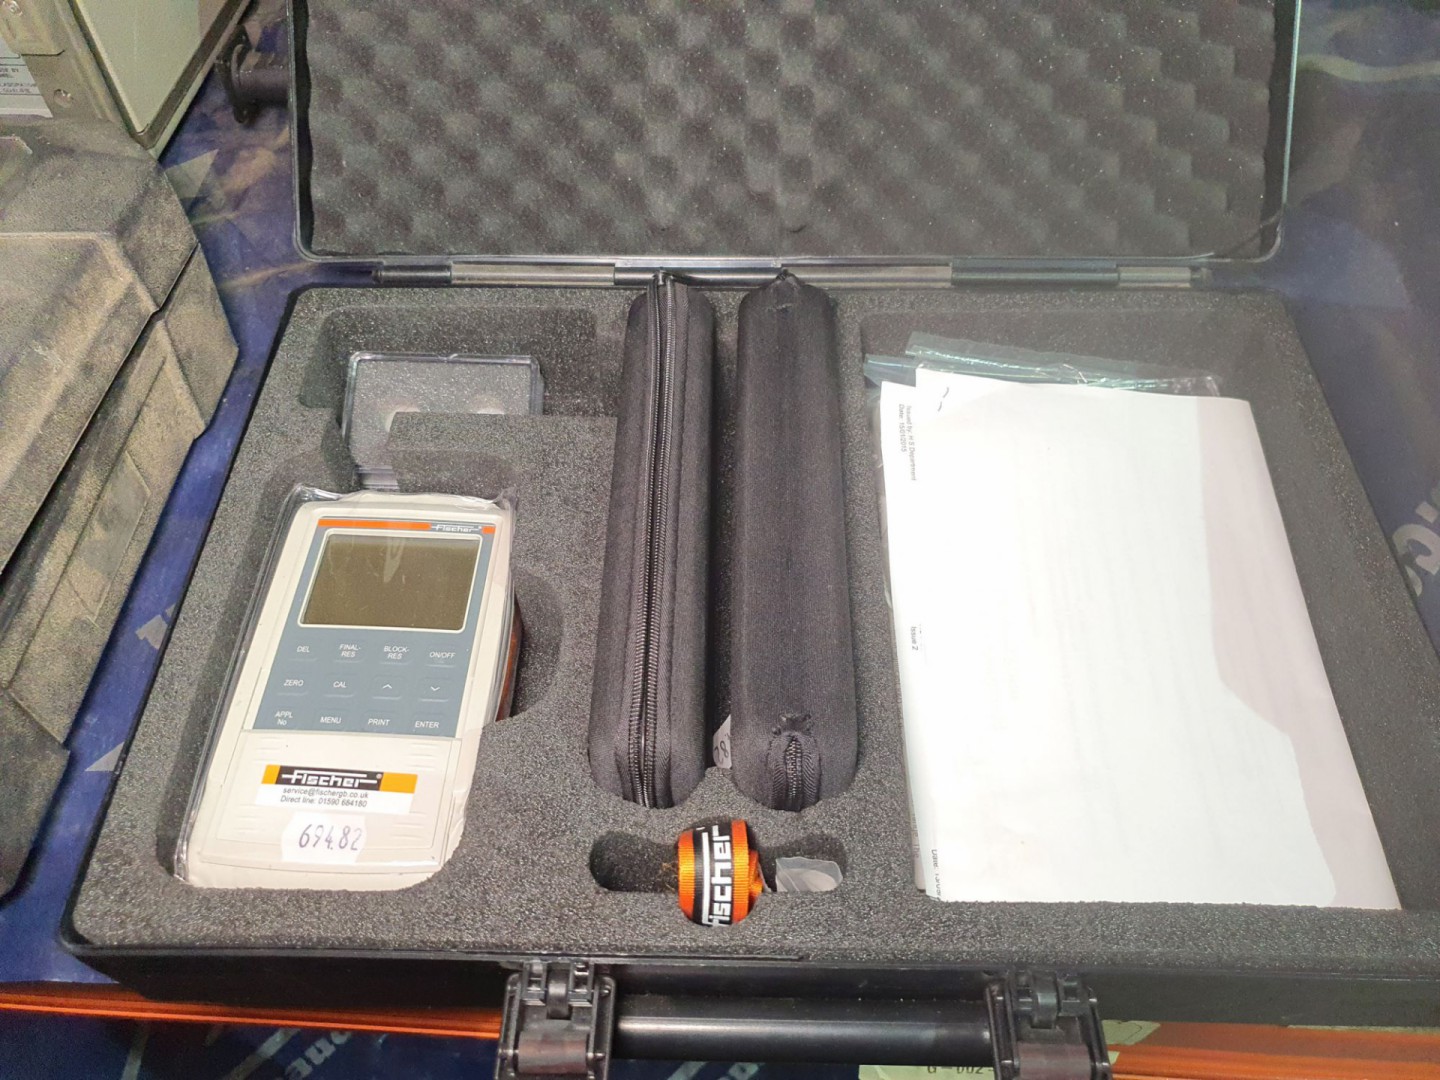 Fischer FMP30 isoscope with equipment in case